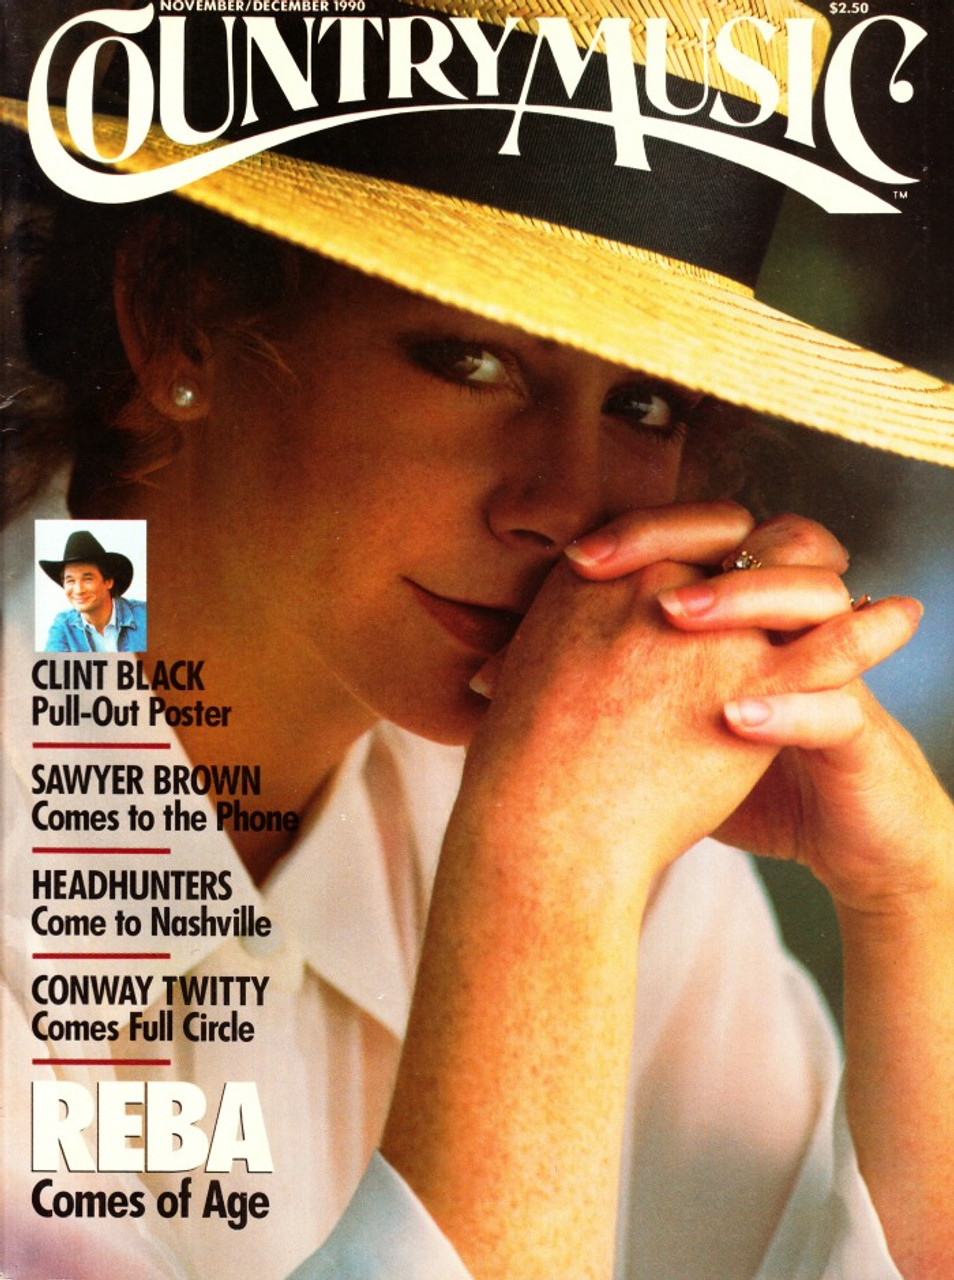 Country Music Magazine November December 1990 Reba McEntire, Clint Black Poster
